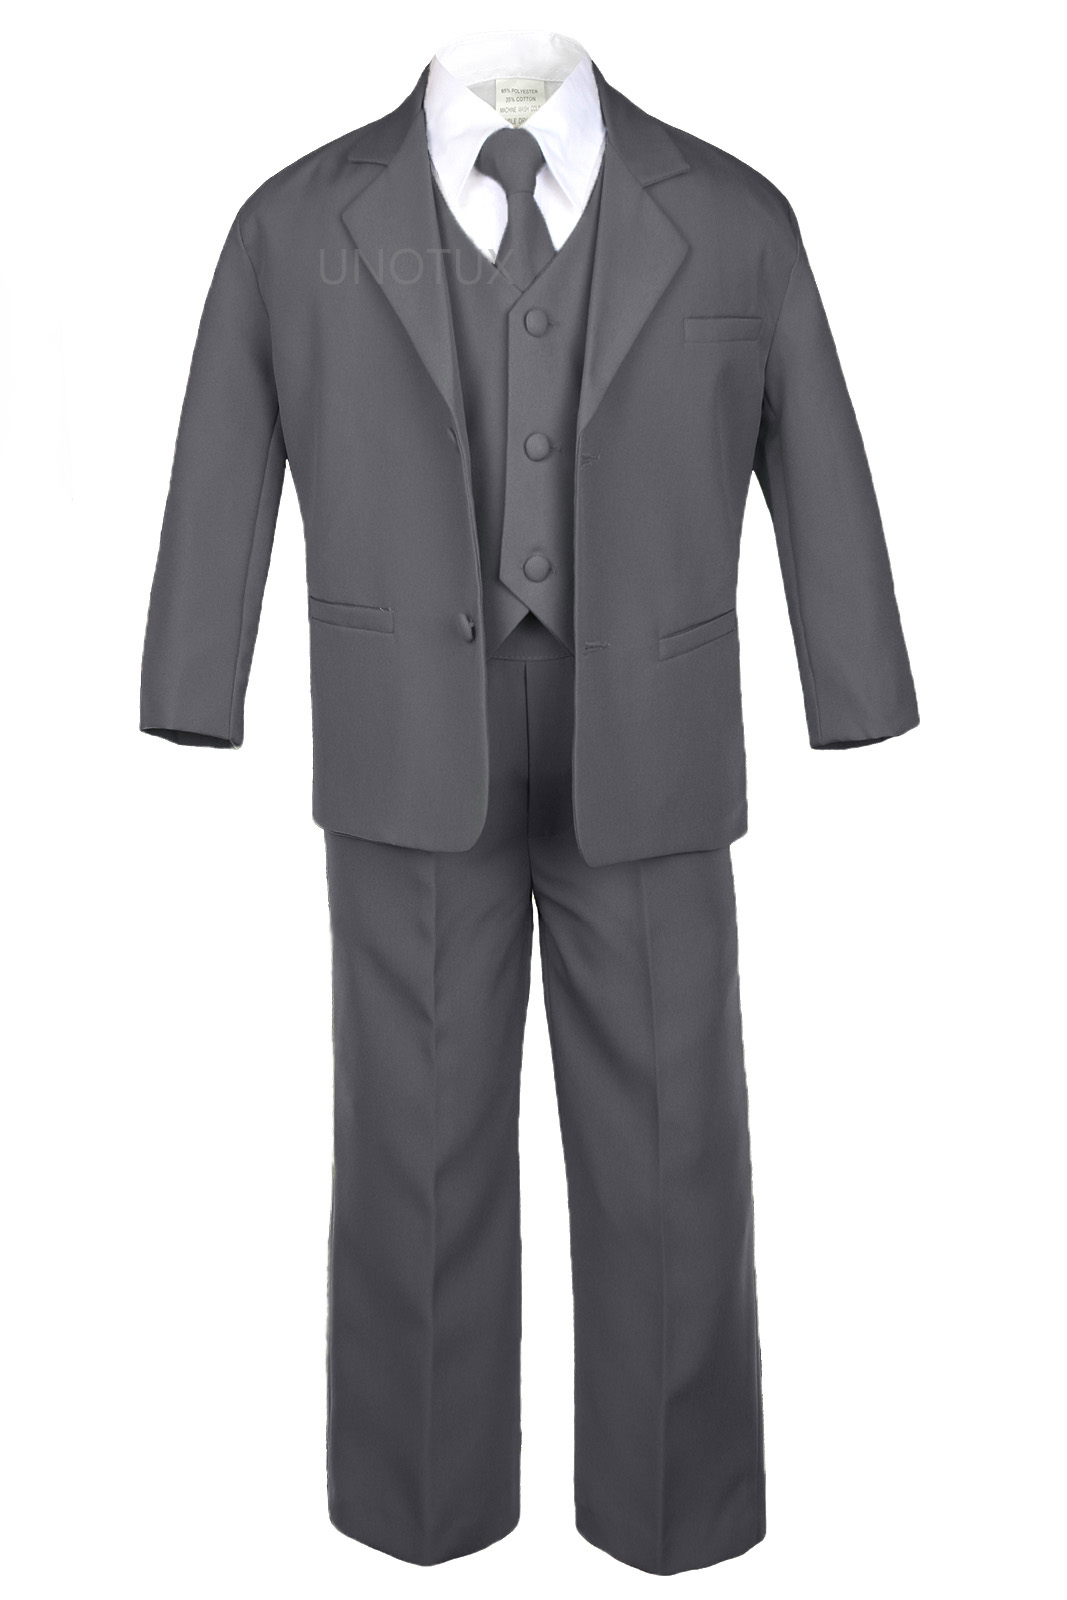 7pc S M L XL 2T 3T 4T Baby Toddler Boys Dark Grey Suits Tuxedo Formal Wedding Party Outfit Extra Satin Navy Necktie Vest Set